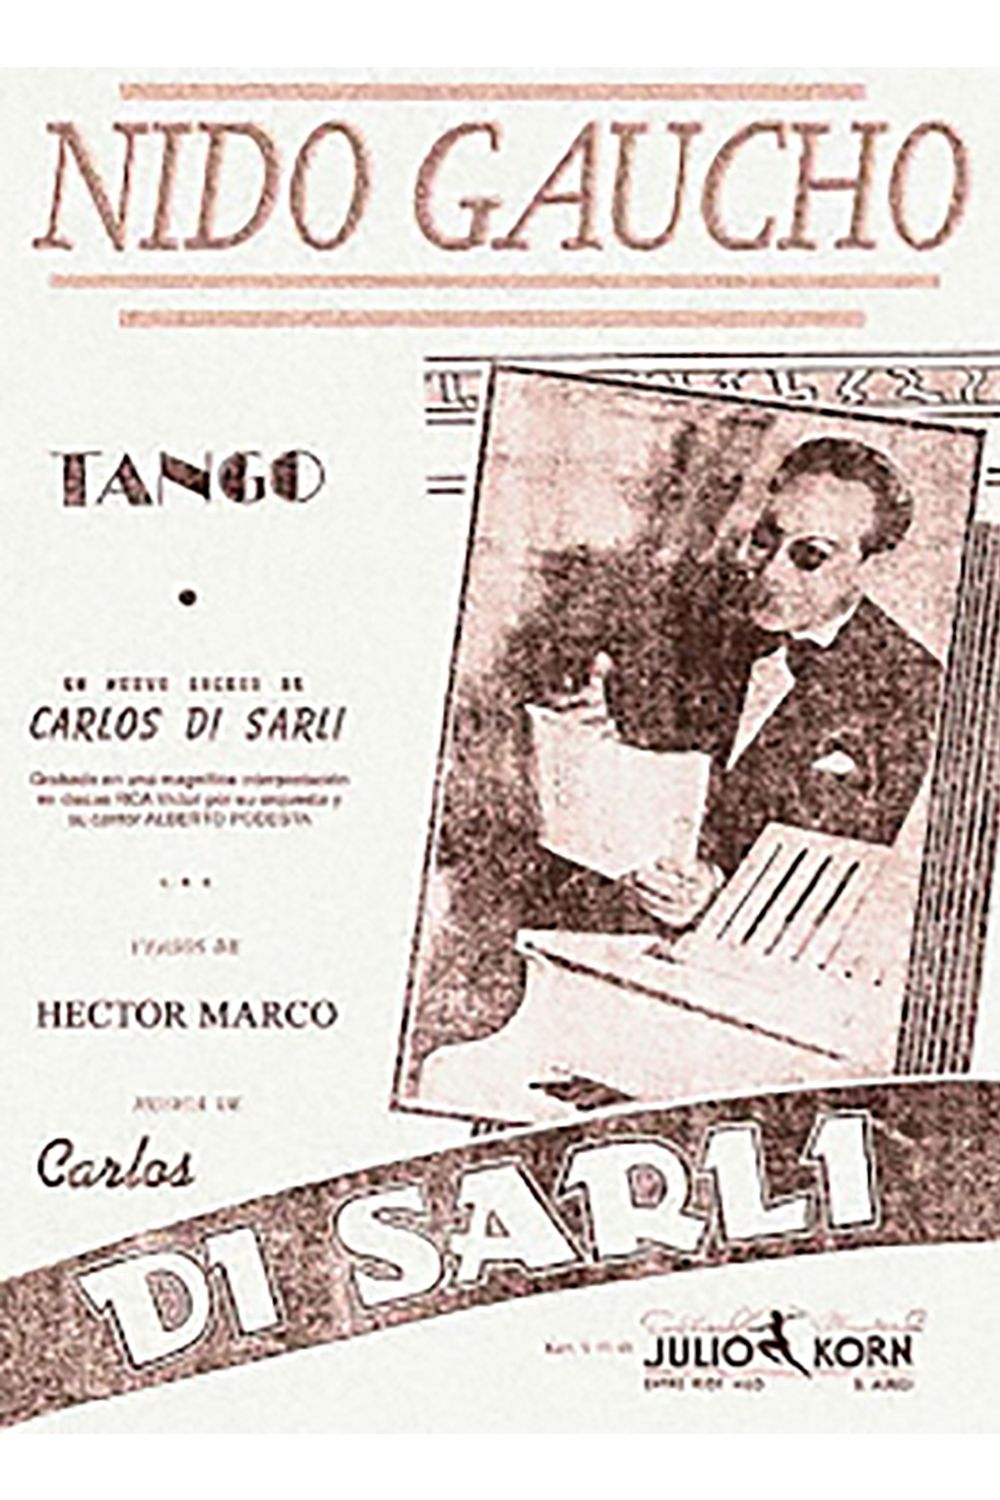 'Nido gaucho', Argentine Tango music sheet cover.